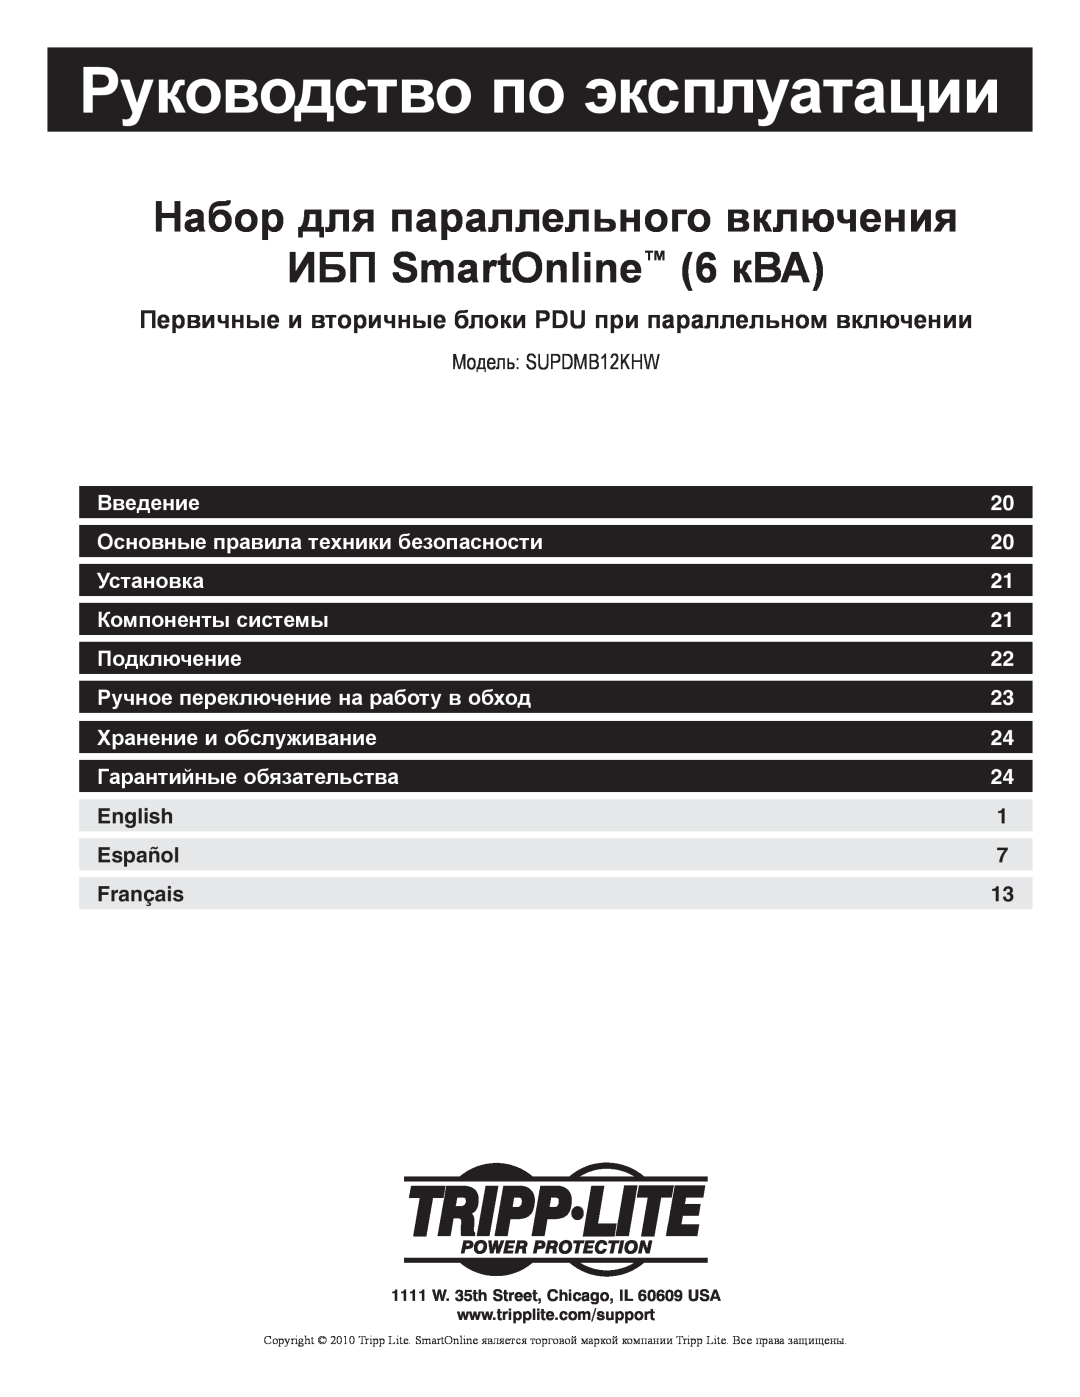 Tripp Lite SUPDMB12KHW owner manual Руководство по эксплуатации, Набор для параллельного включения ИБП SmartOnline 6 кВА 